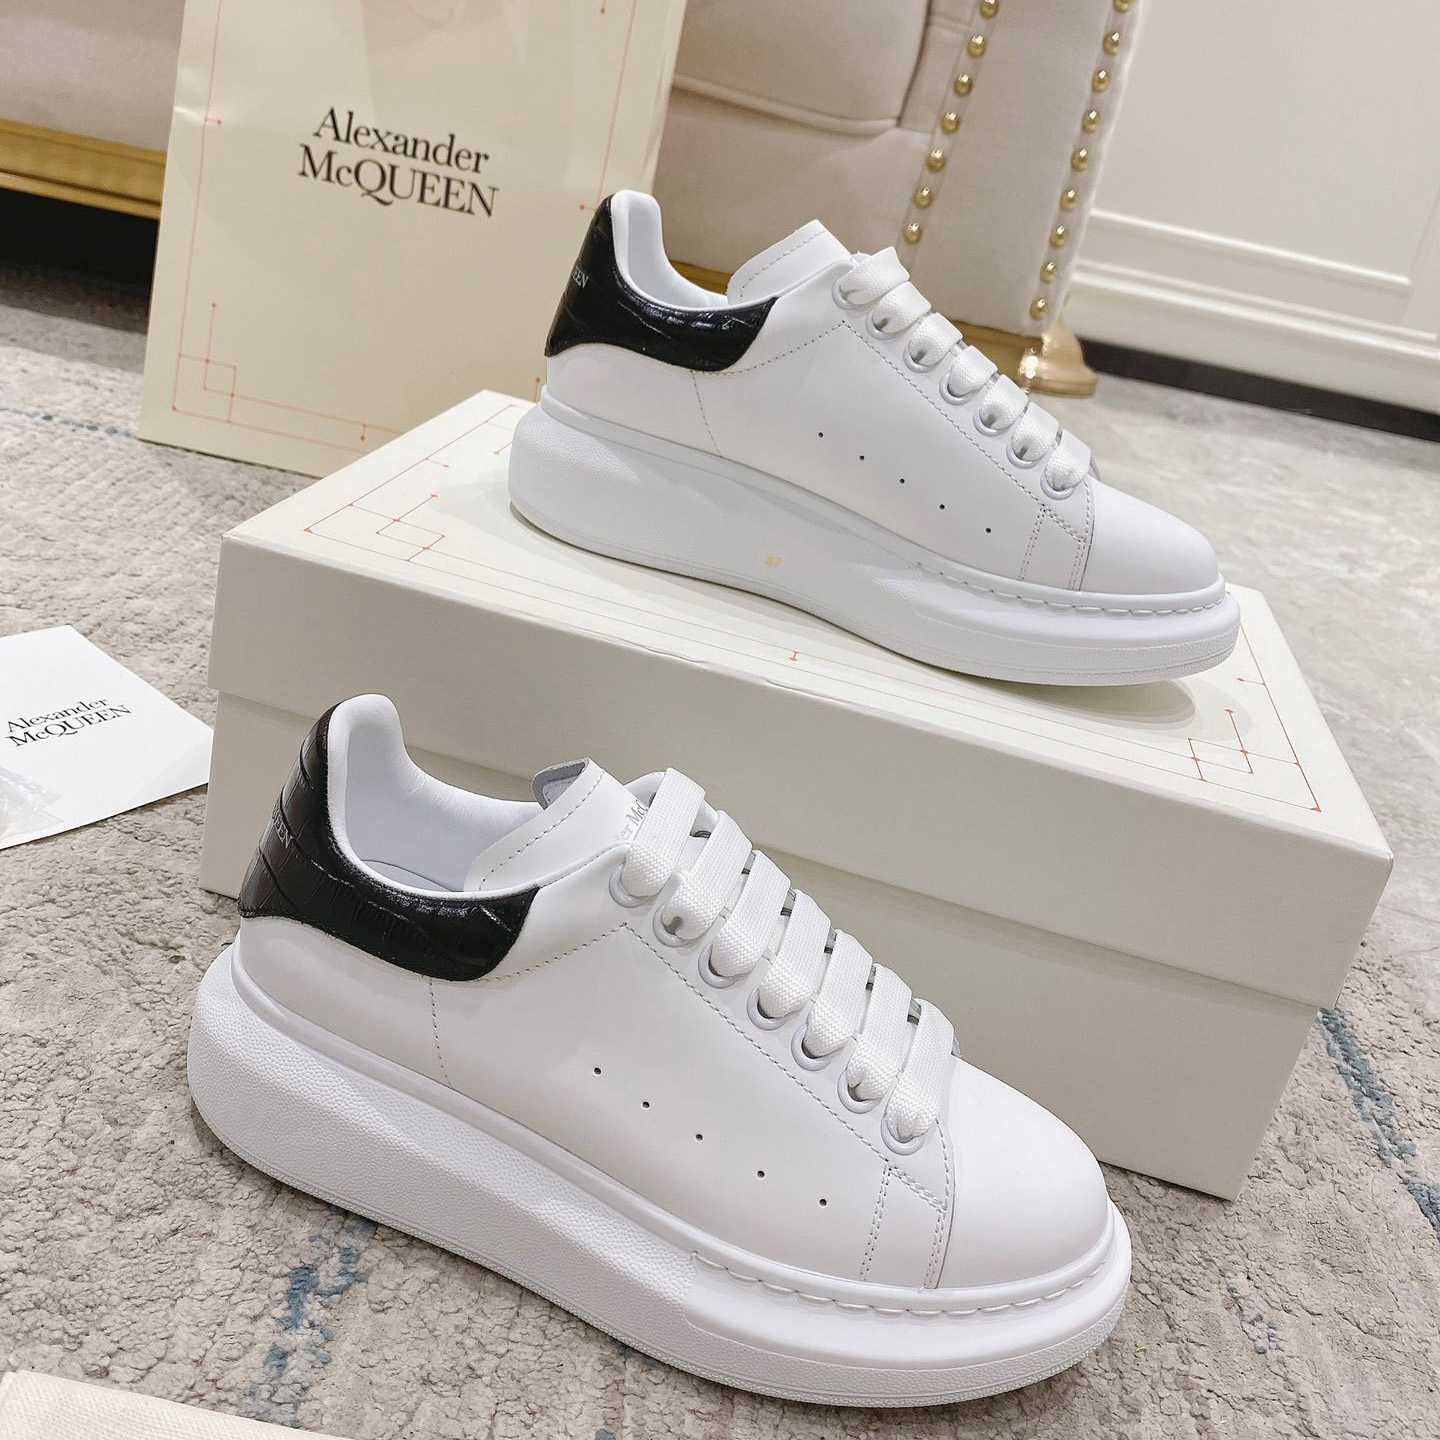 Alexander Mqueen Oversized Sneaker In White/Black - DesignerGu